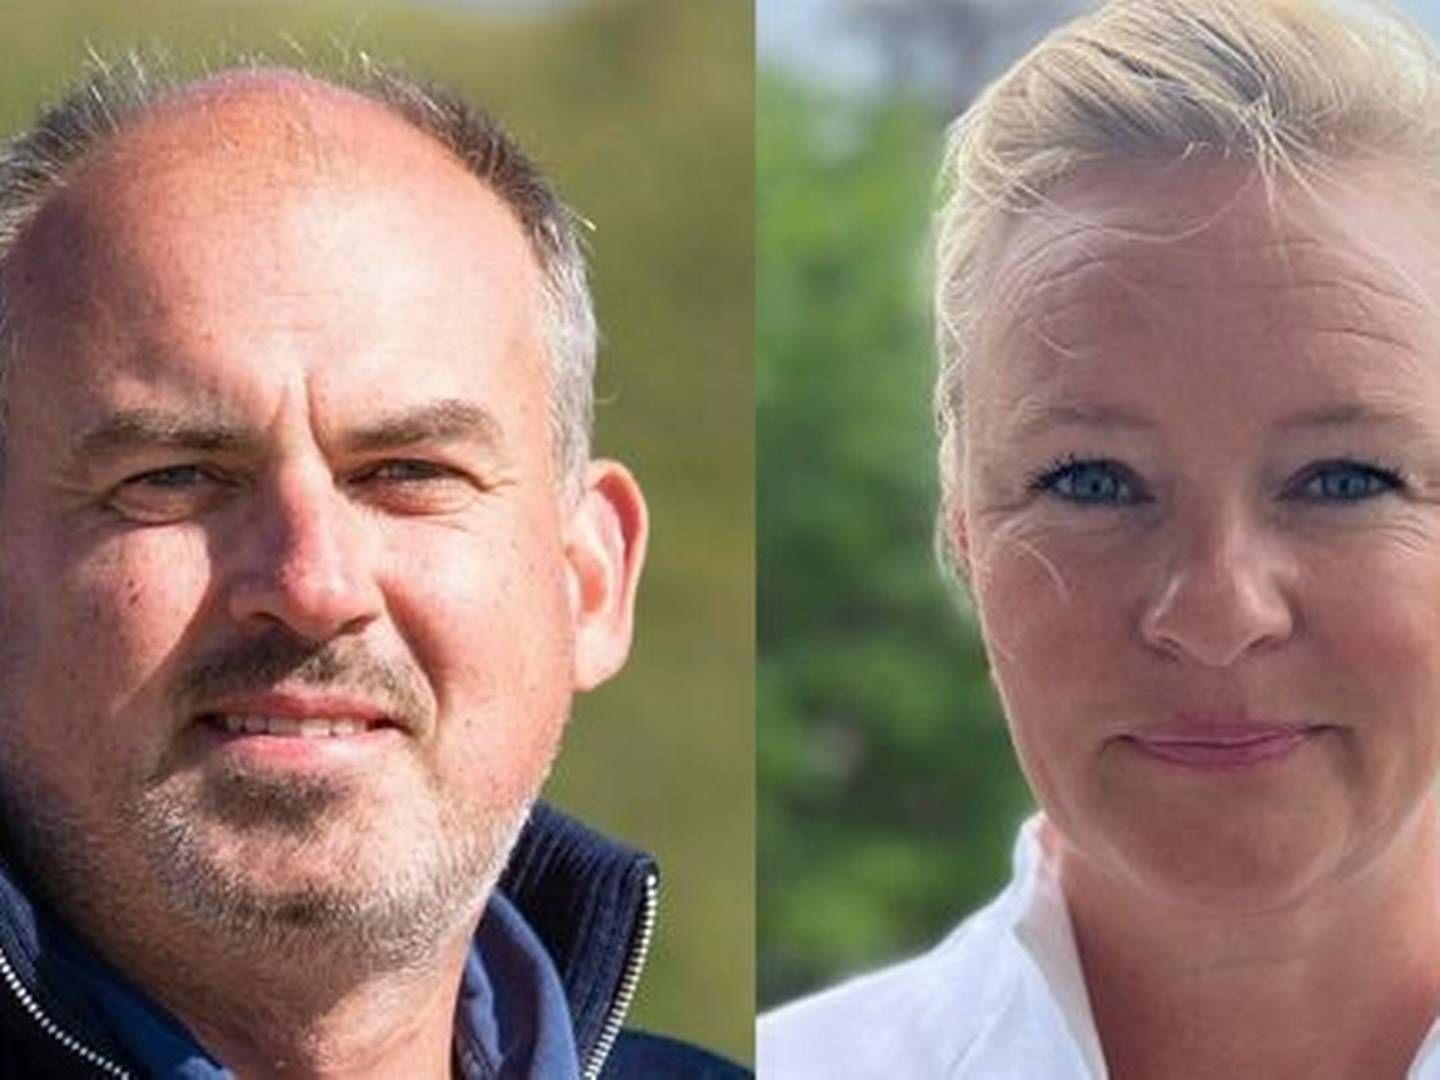 Michael Bille Frandsen og Mia Marie Borup er nye producere i Nordisk Film. | Foto: Mike Köllofel og Elvira Borup Povlsen